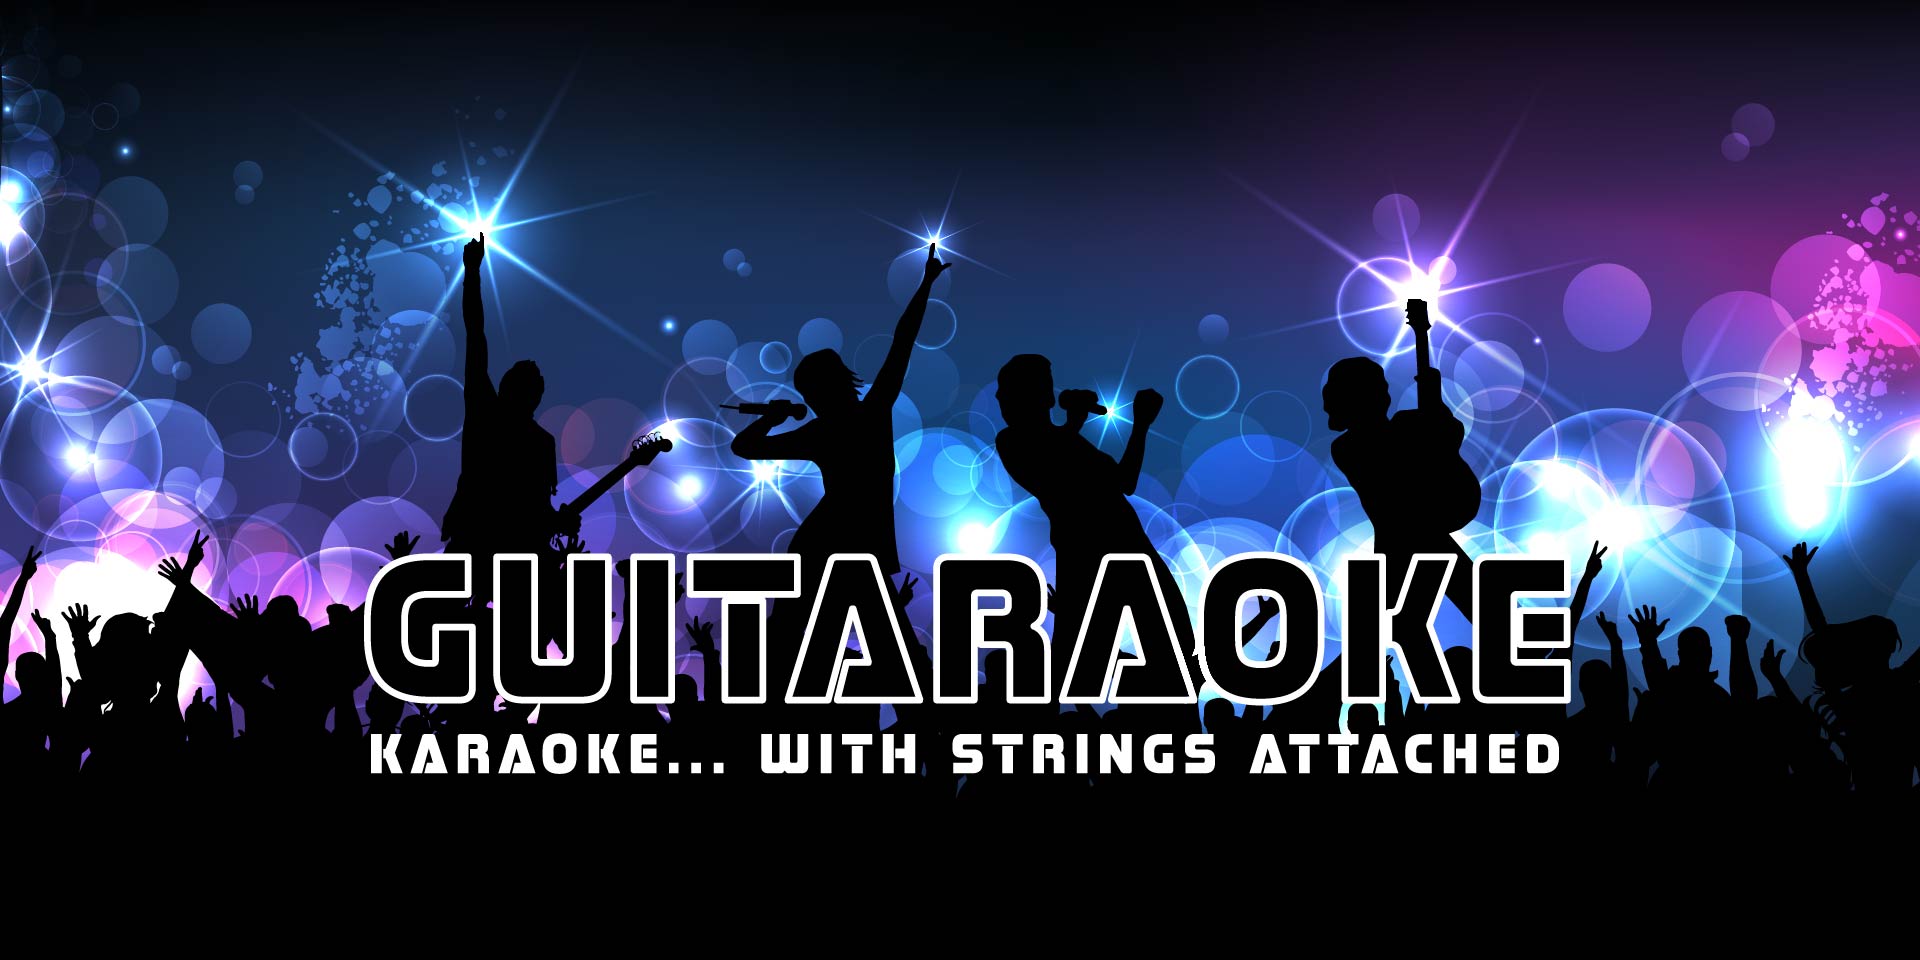 guitaraoke-social-media-banner